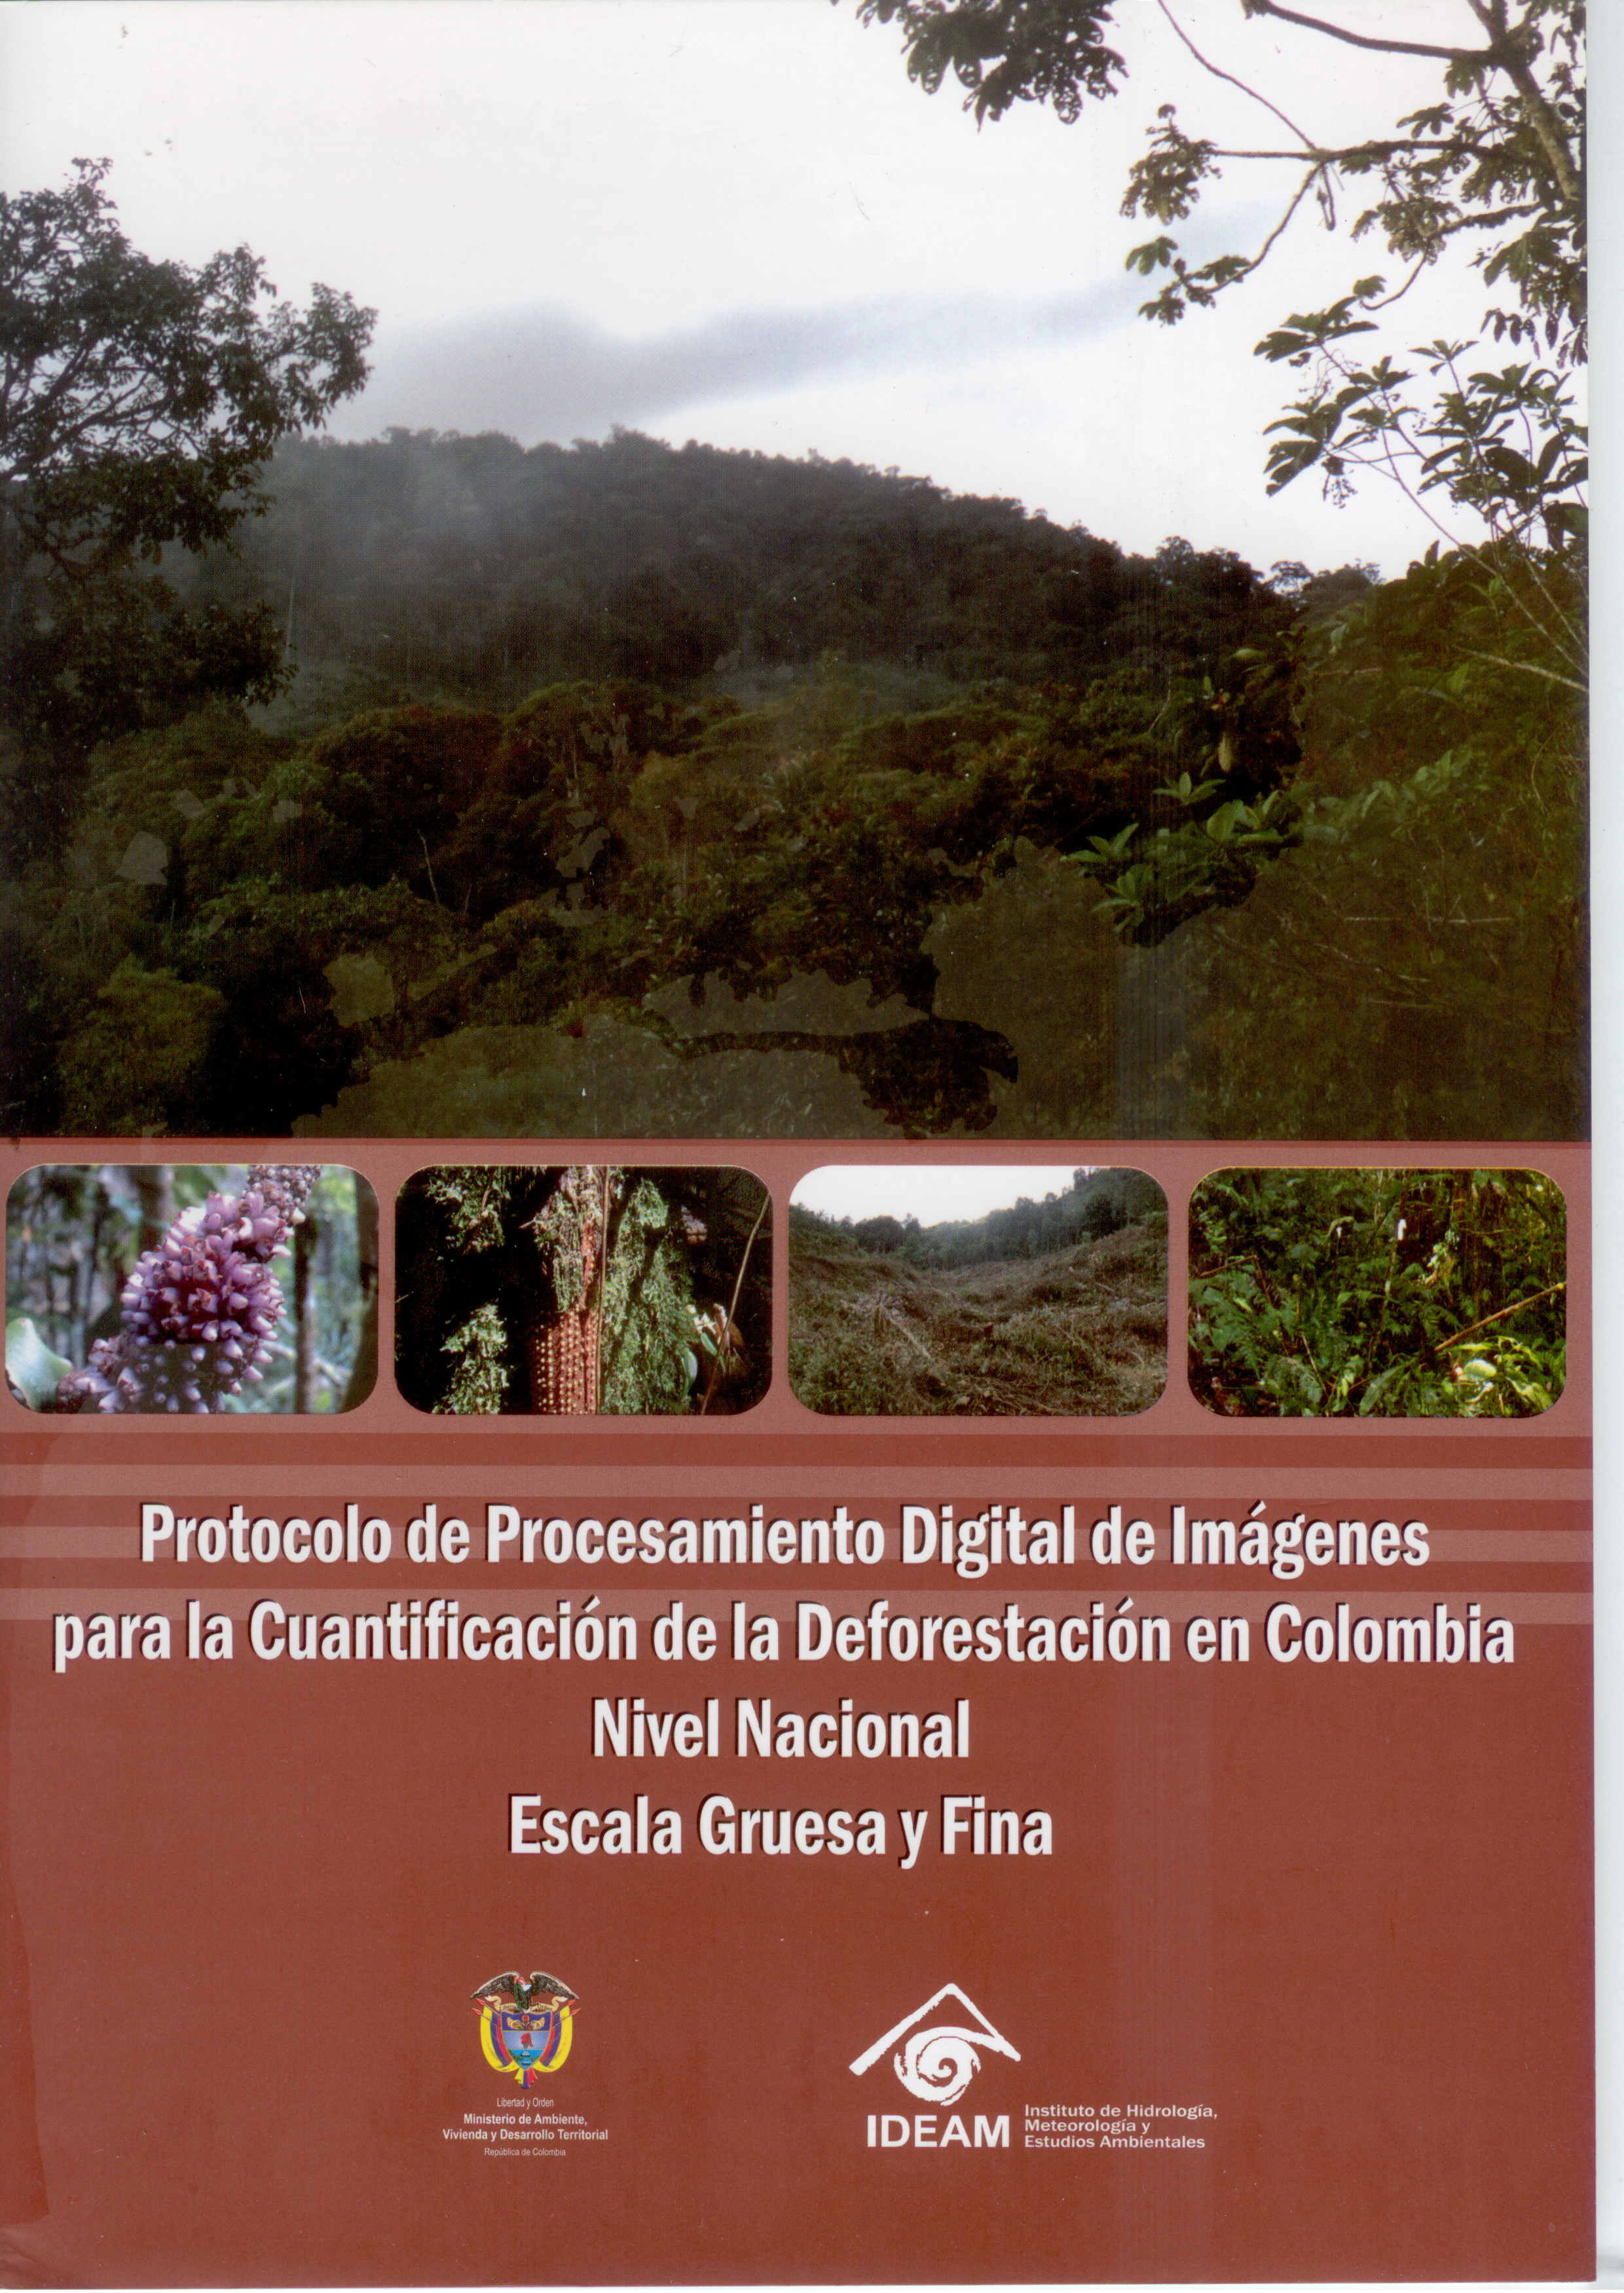 http://www.cenicana.org/investigacion/seica/imagenes_libros/2012/nov_2012/protocolo_procesamiento.jpg